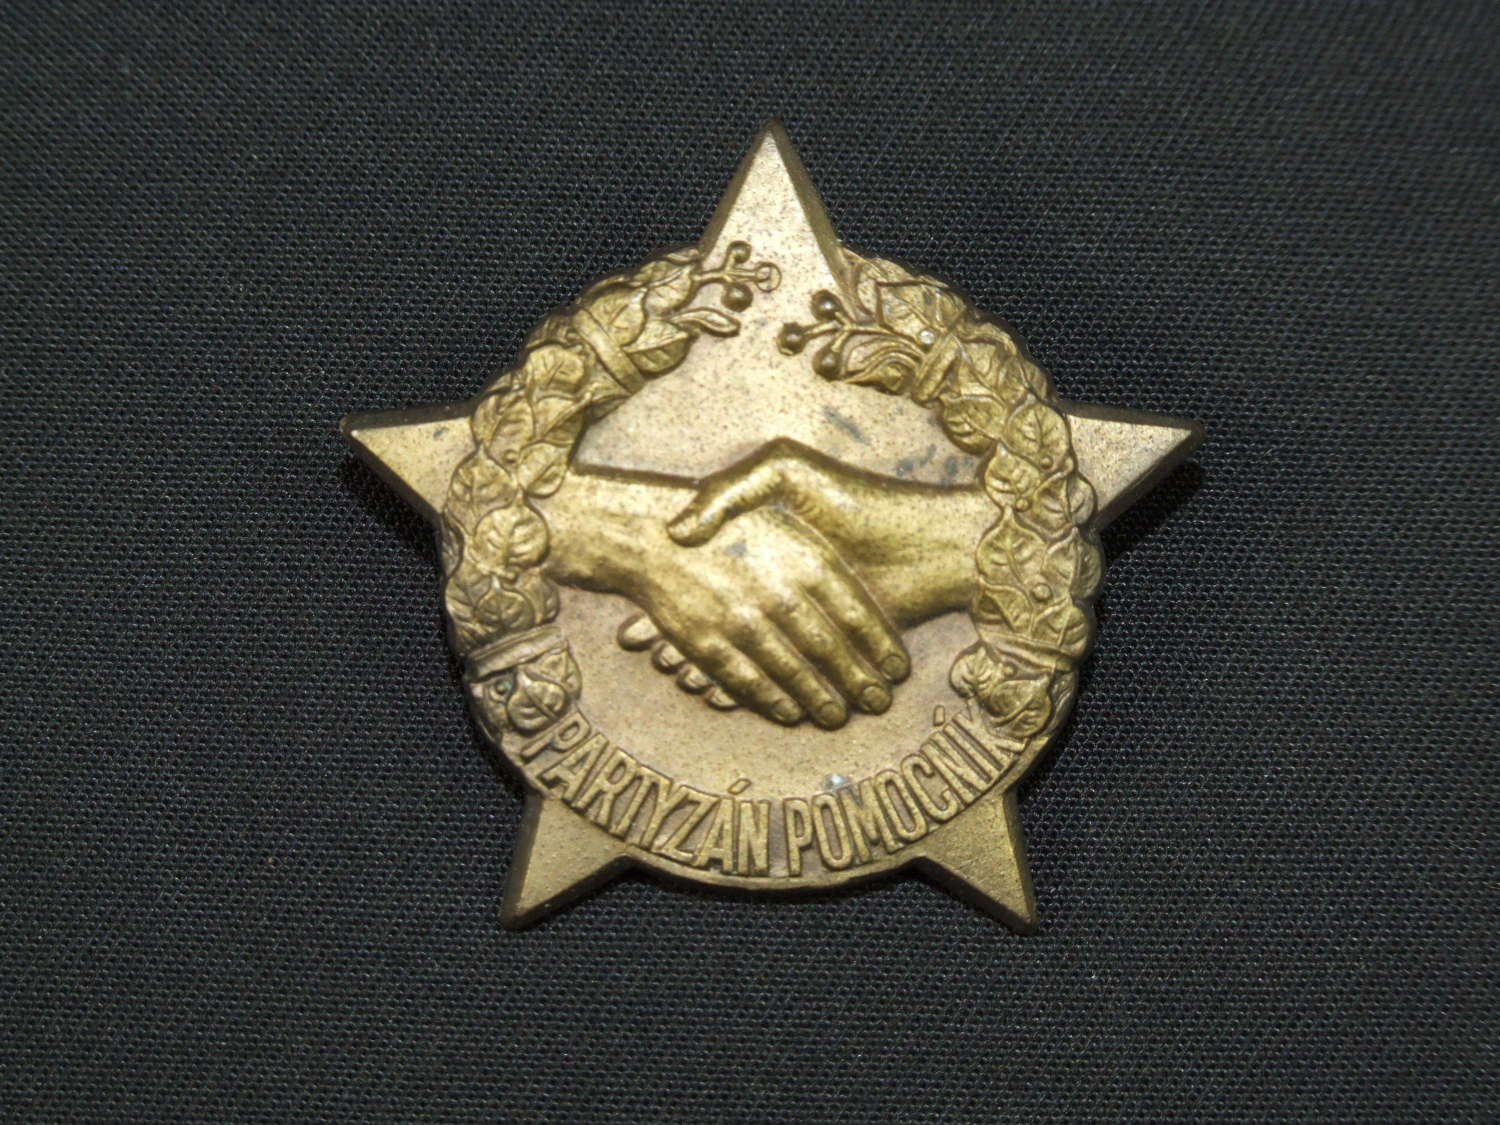 Czechoslovak Partisan helper Badge